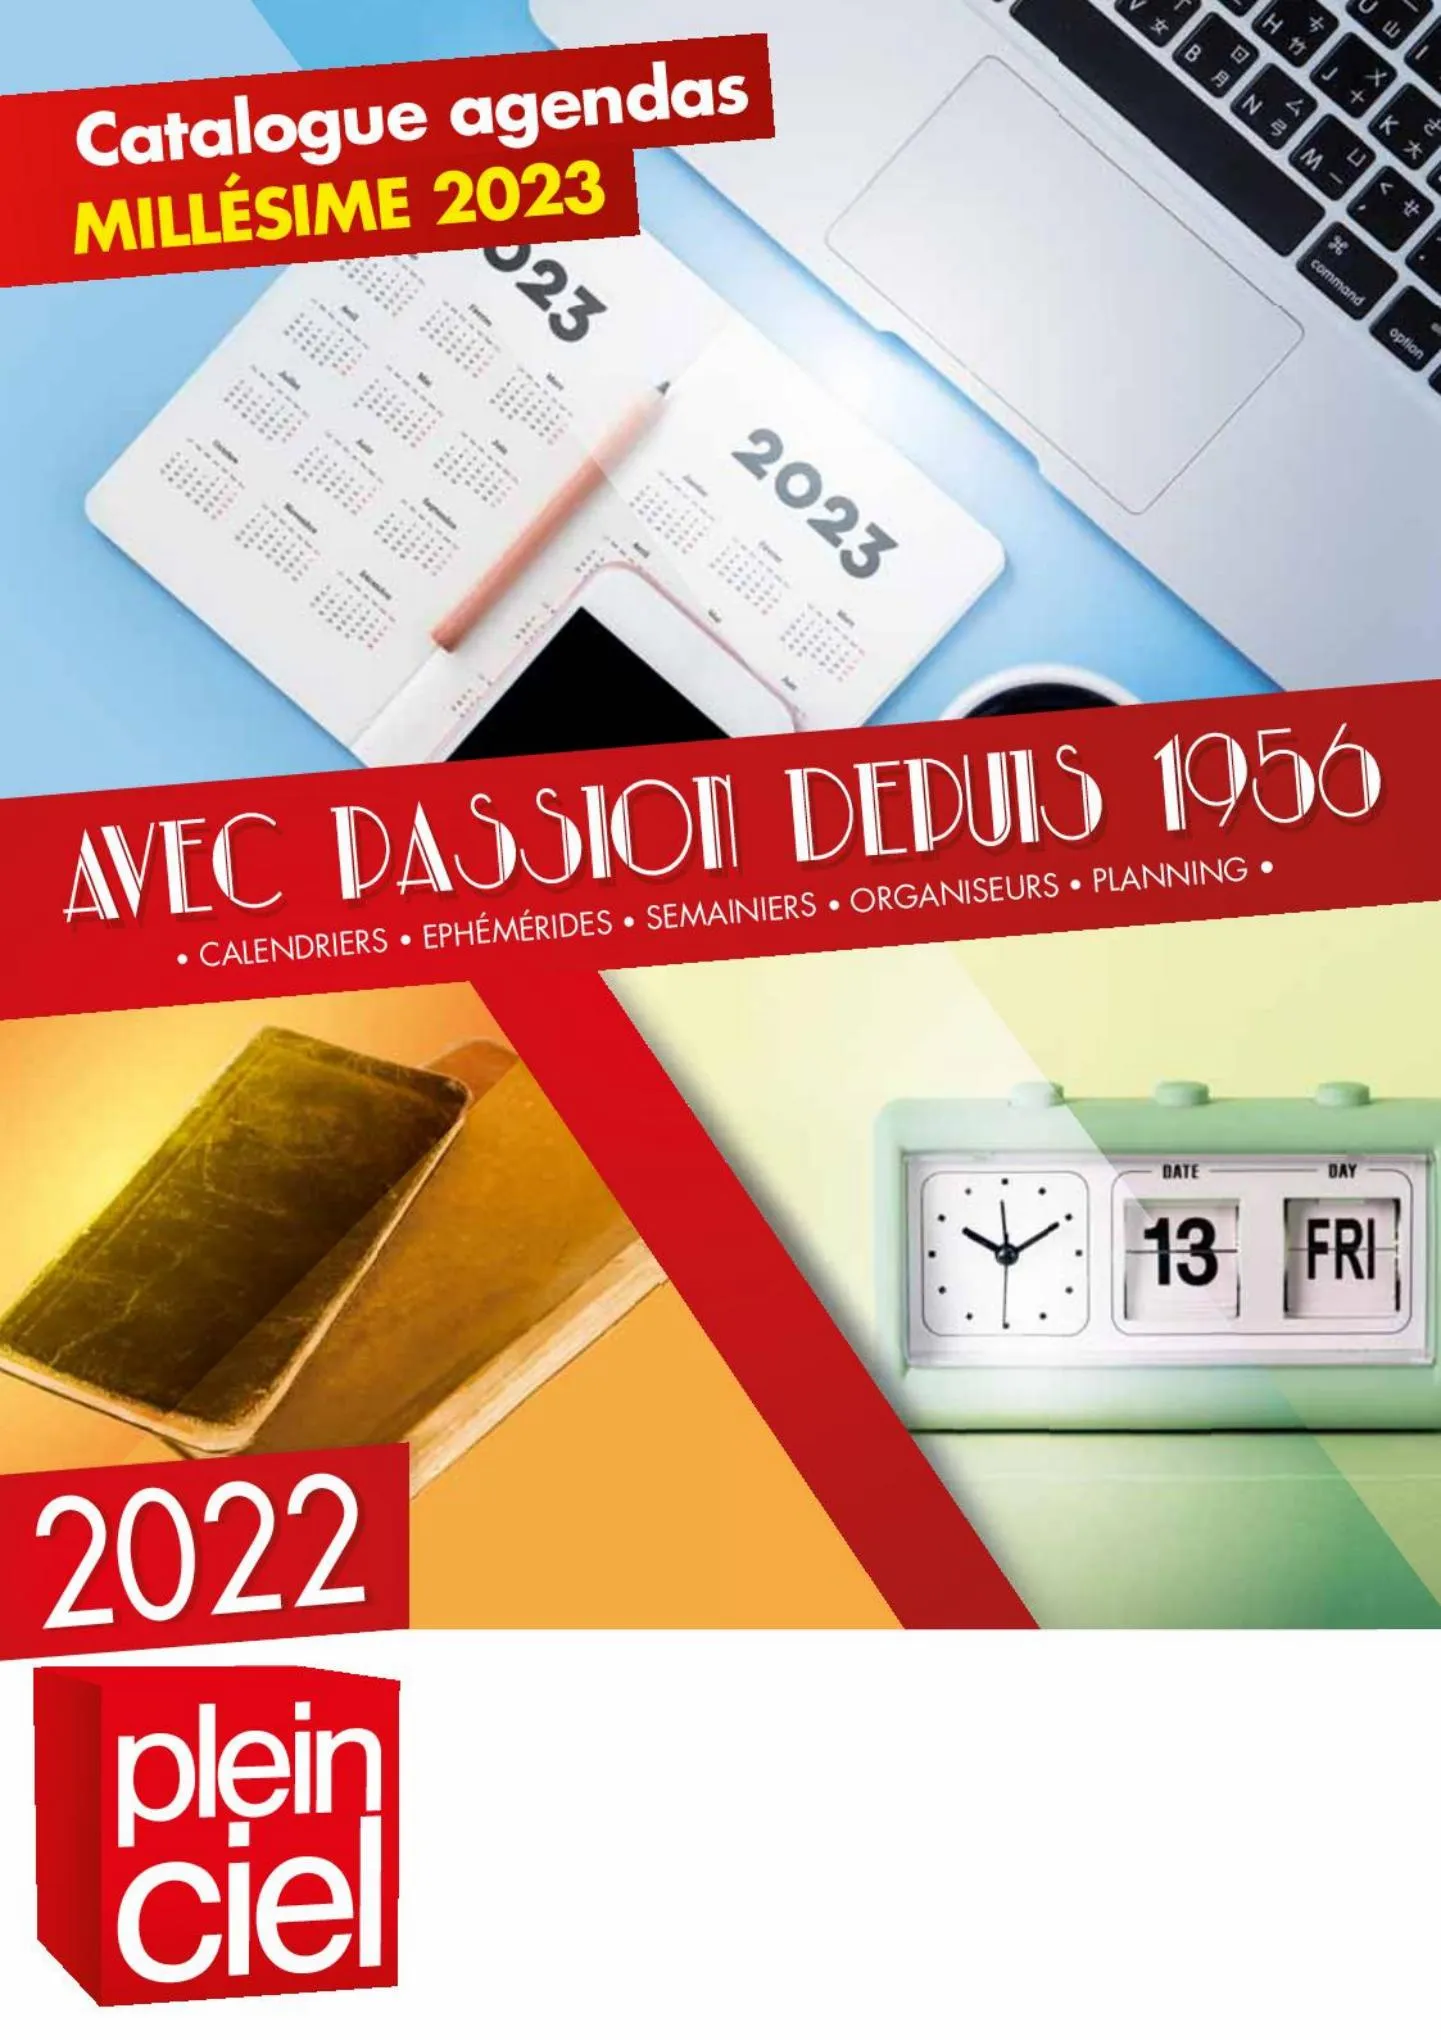 Catalogue Catalogue Agendas 2023, page 00001